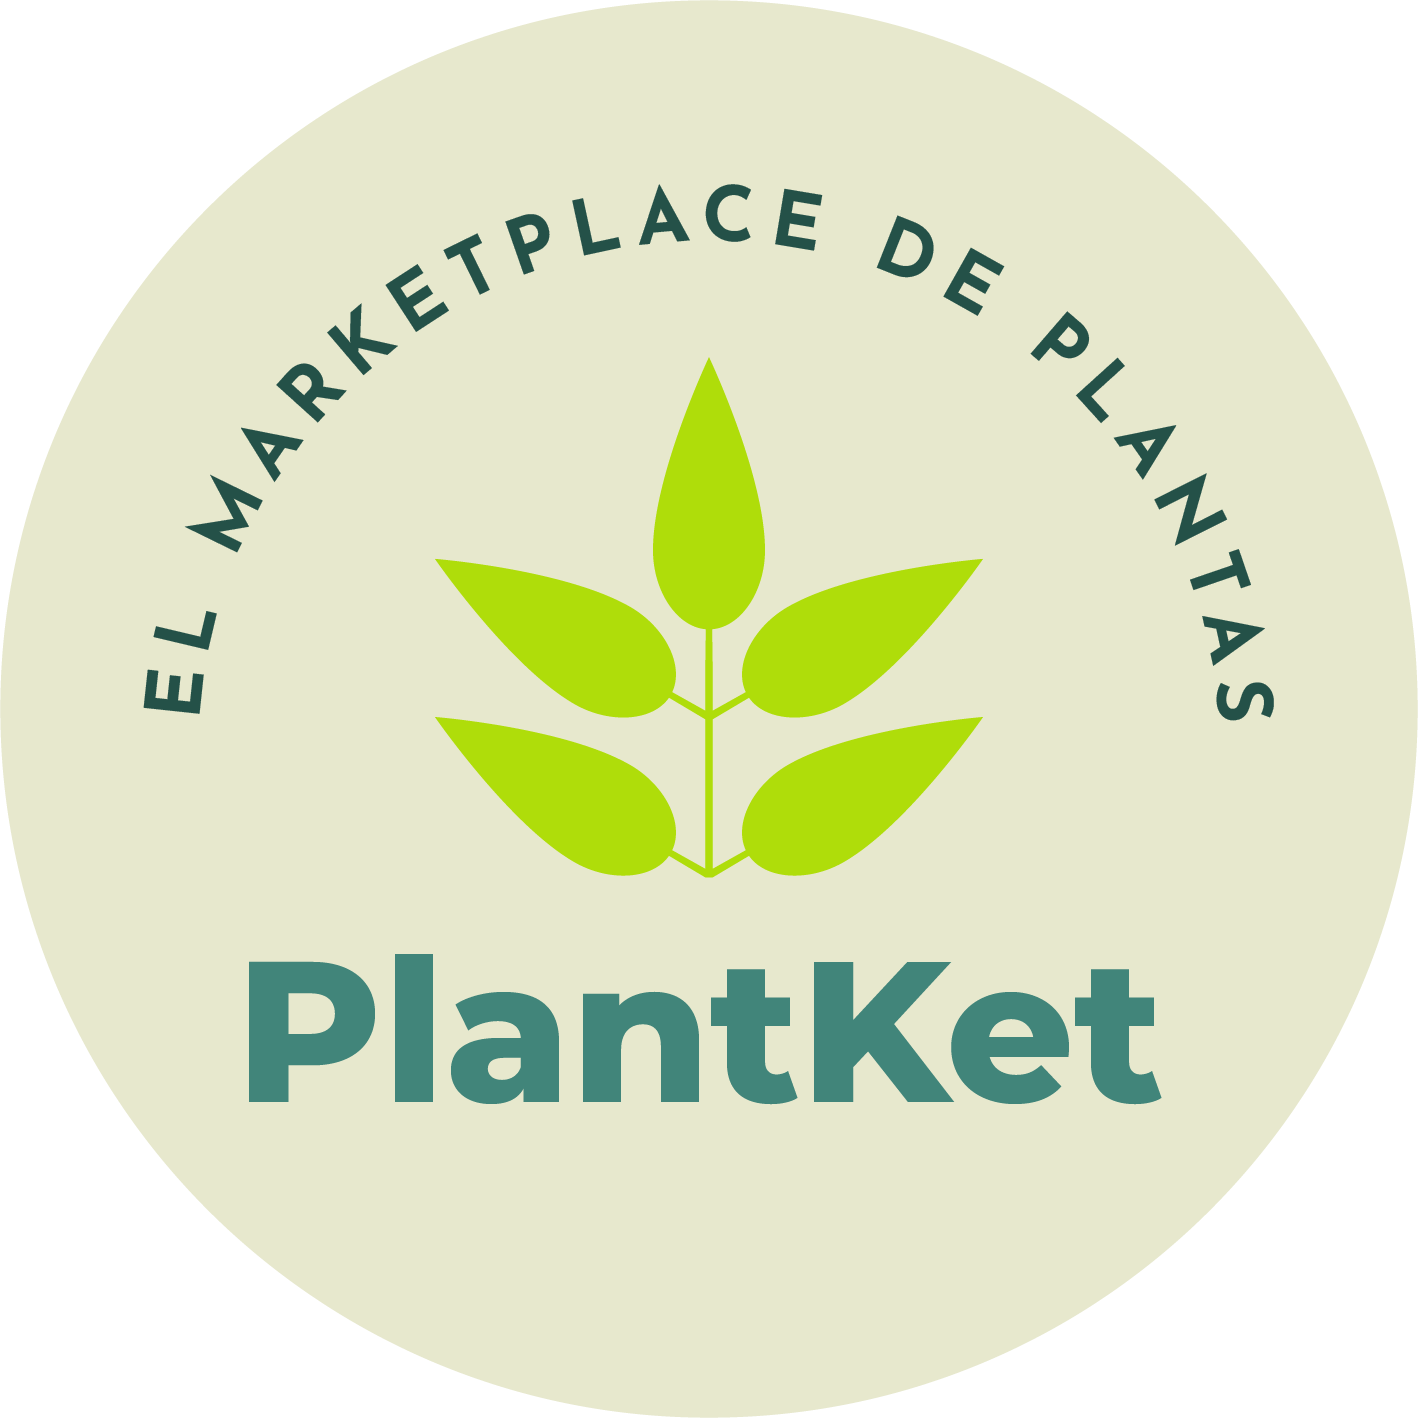 Plantket